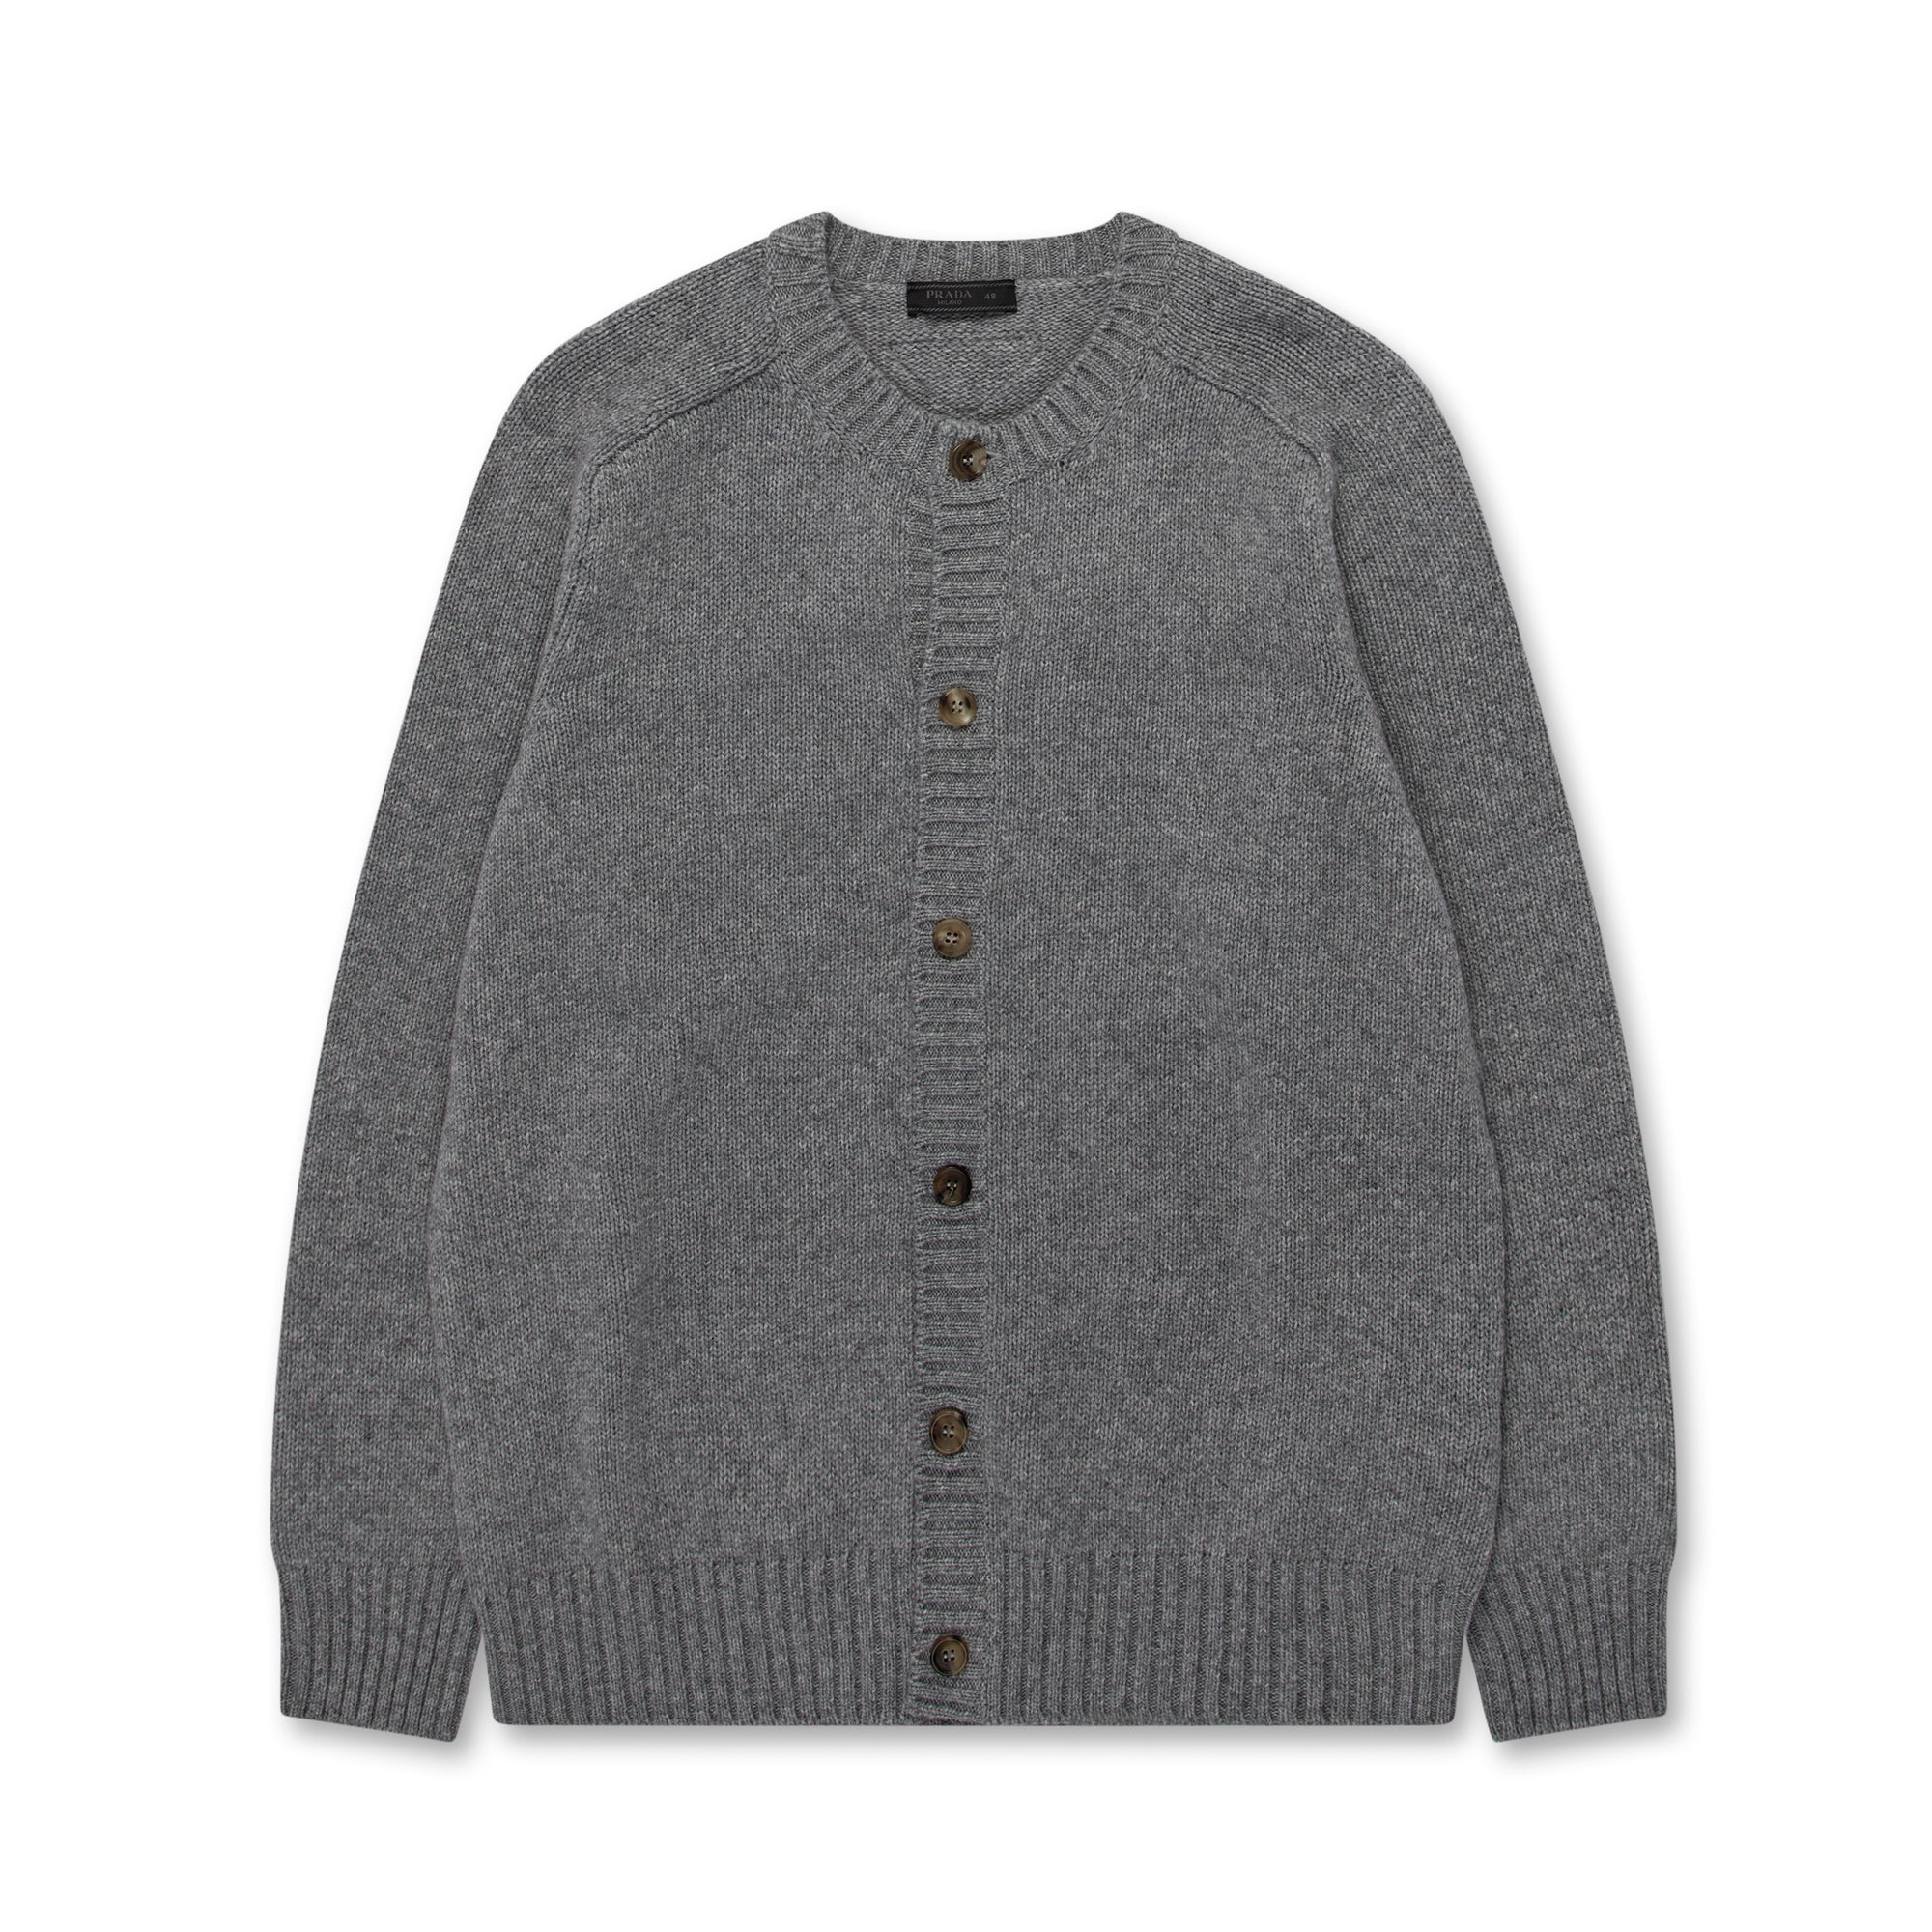 Prada - Men’s Wool and Cashmere Cardigan - (Grey) view 5